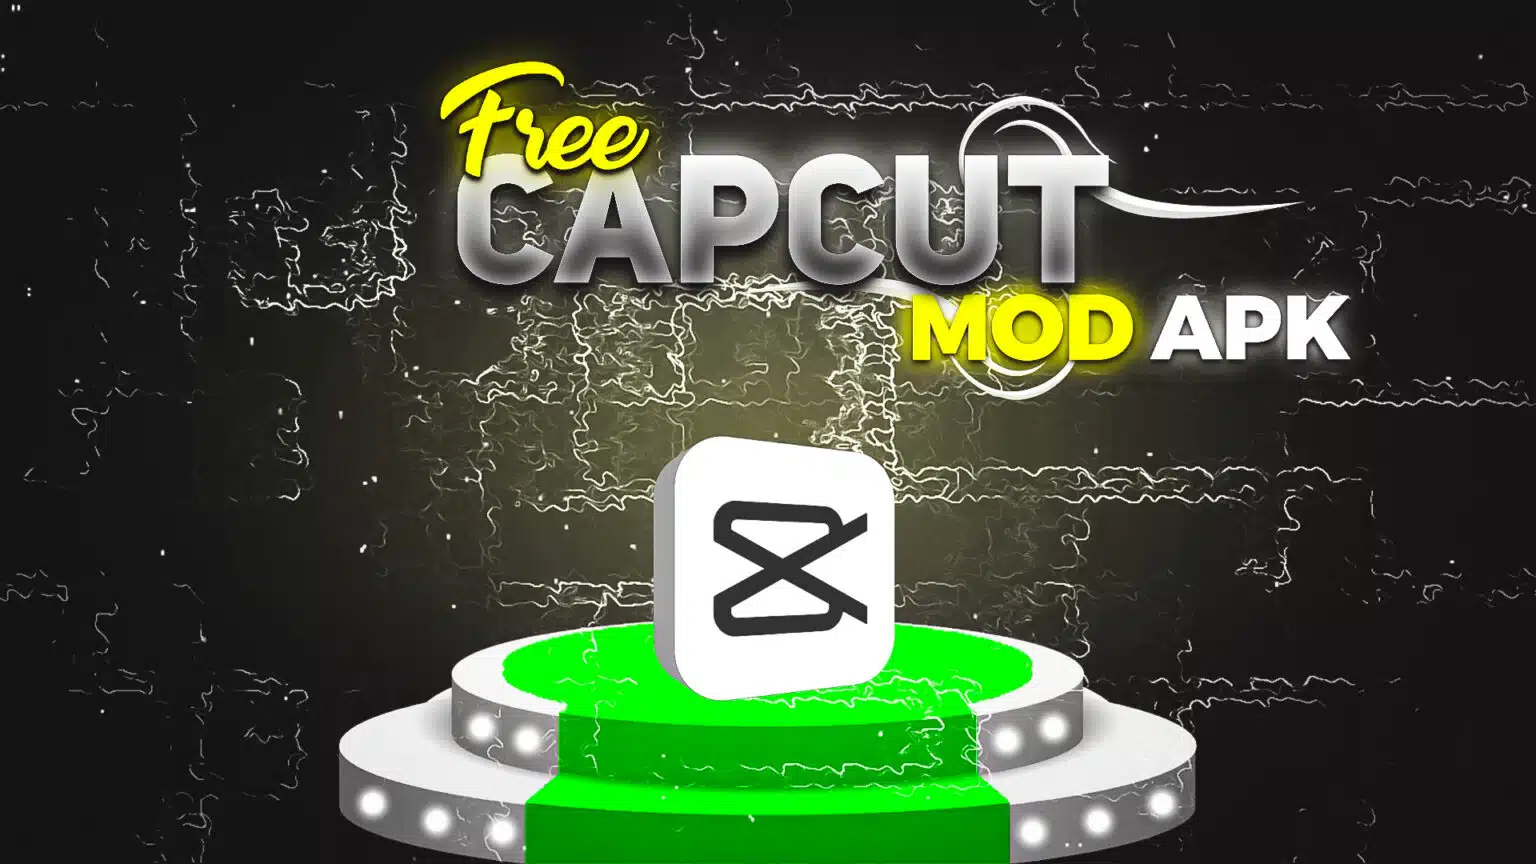 capcut mod apk latest version 11.9.0 download